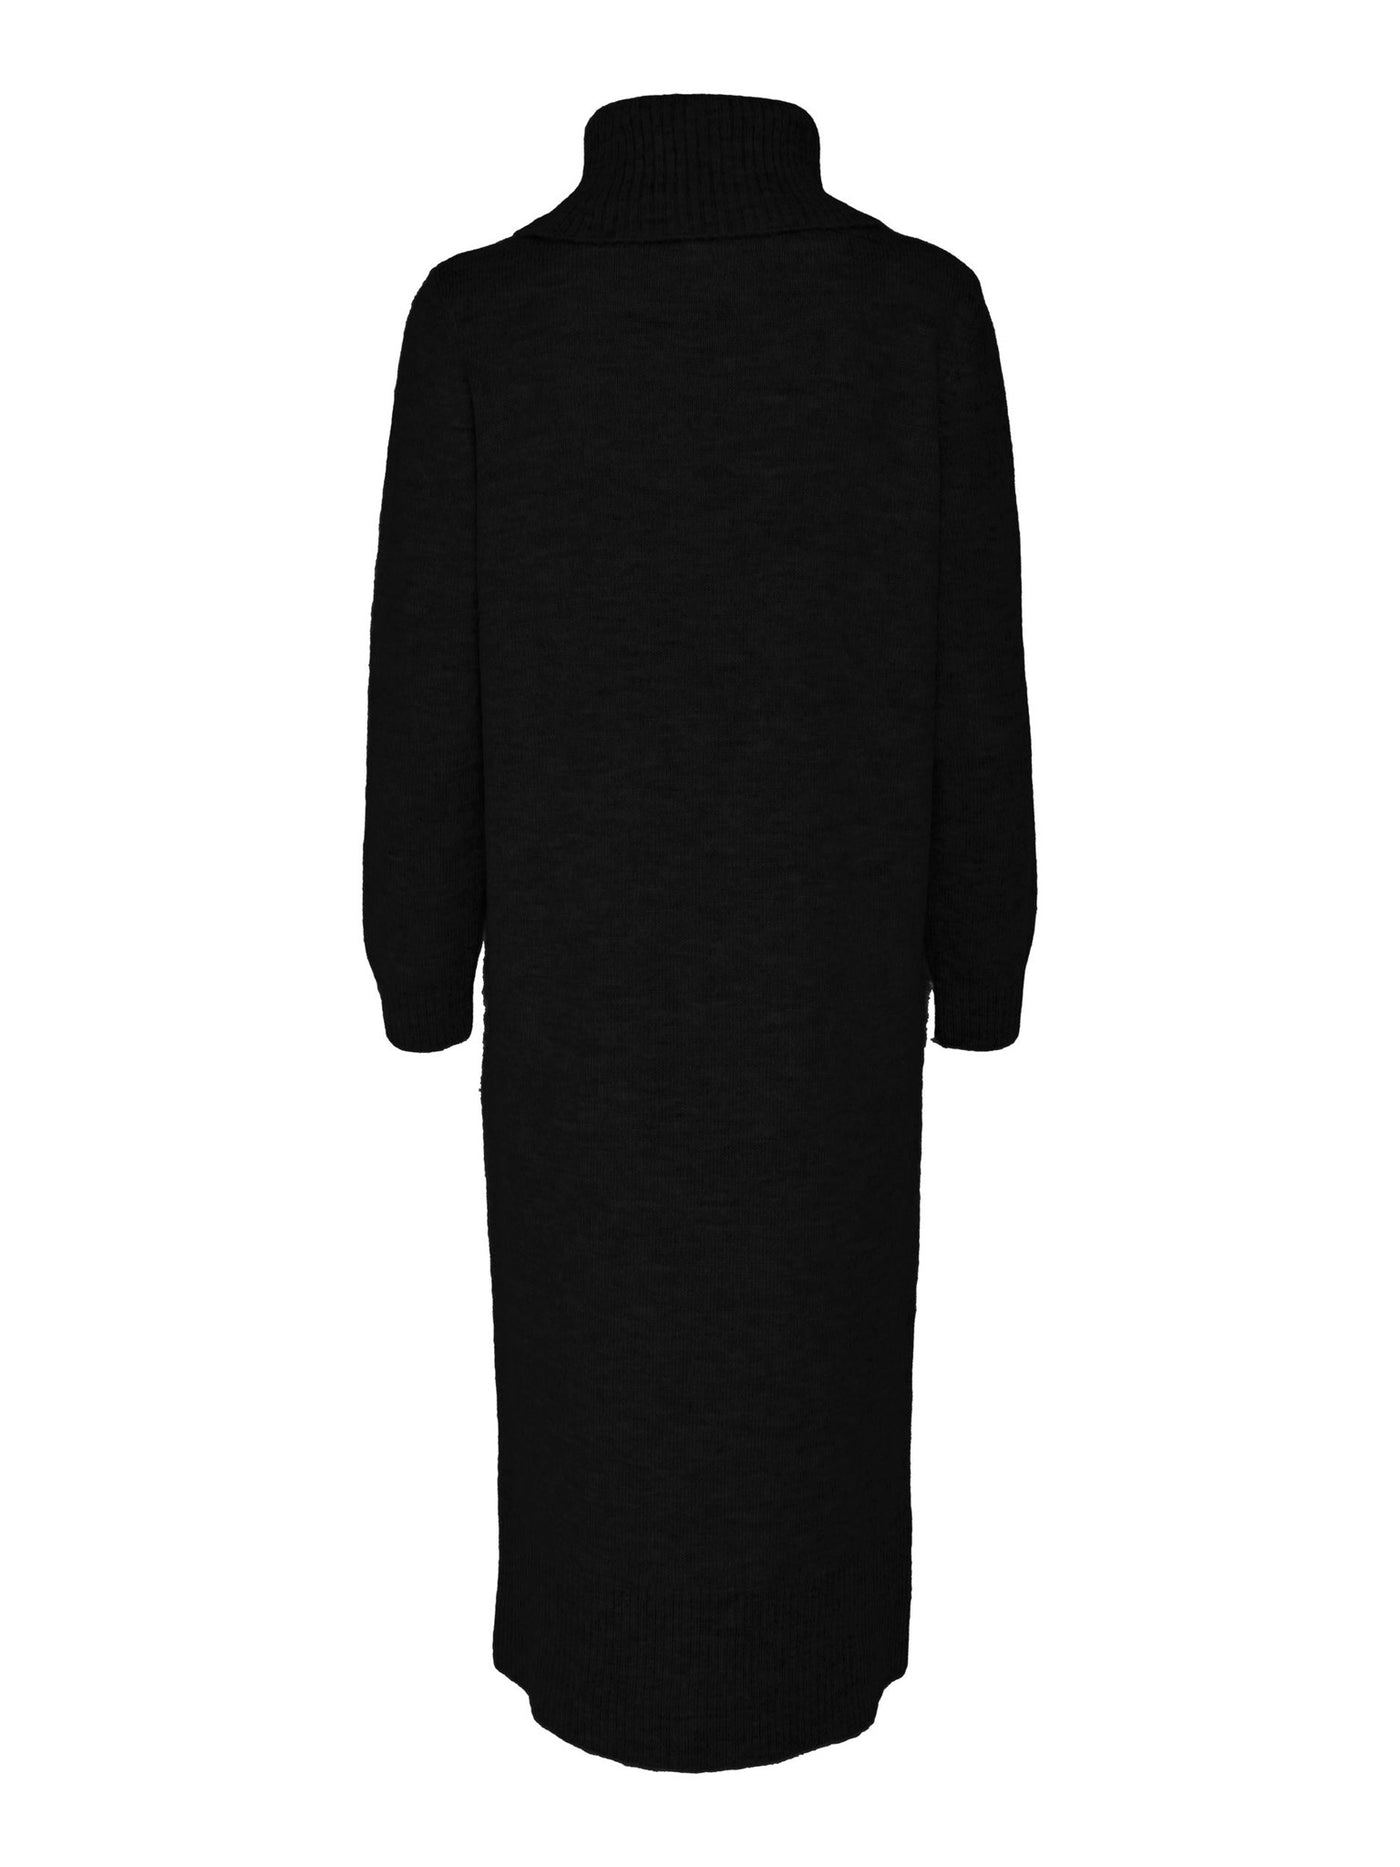 Brandie Roll Neck Dress - Black - ONLY - Black 7